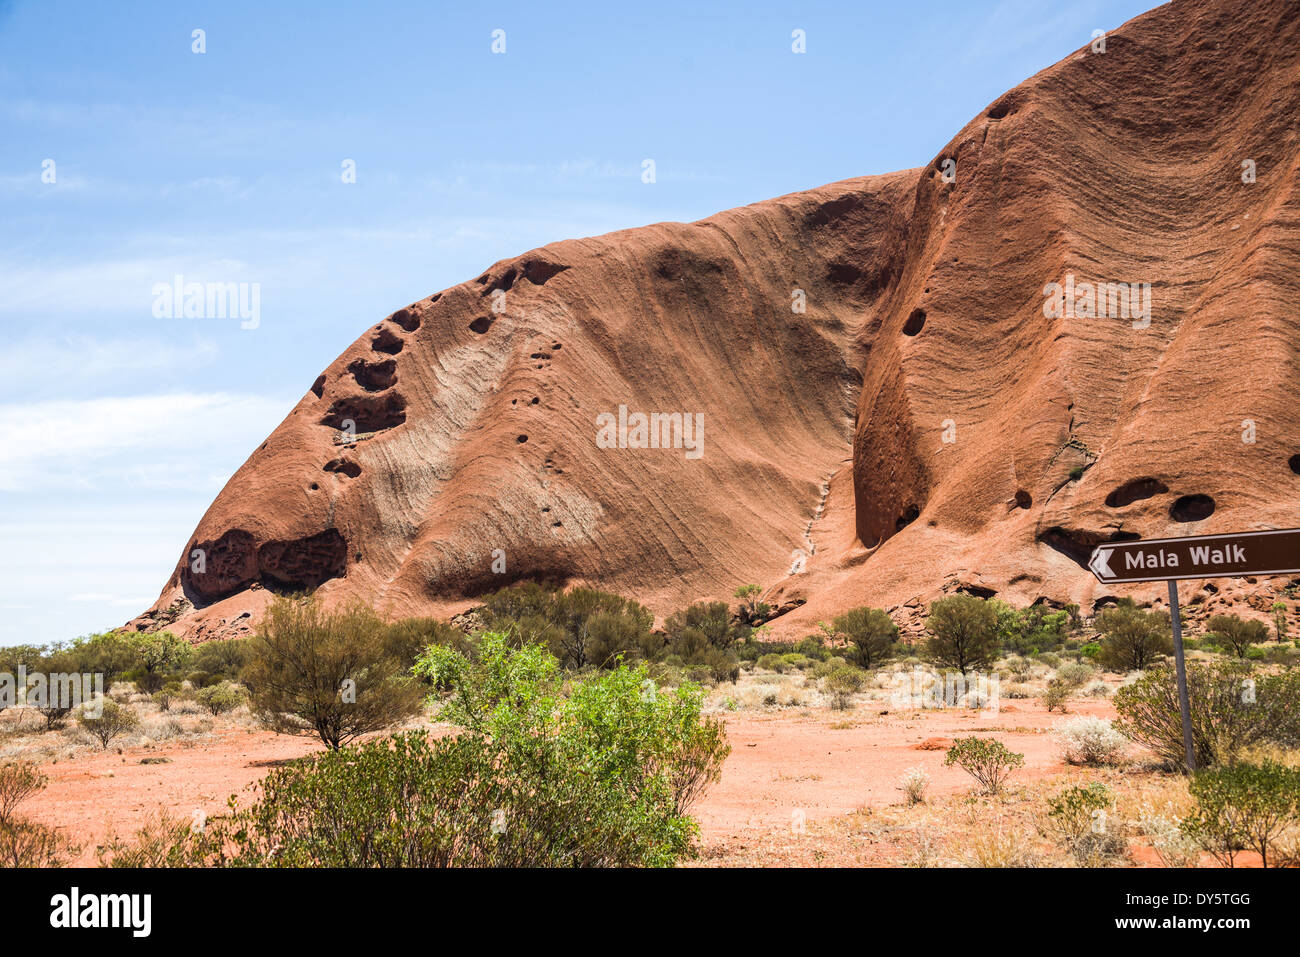 Ayers Rock  Northern Territory Australia - Native spiritual home for Aborigines  portrait Stock Photo